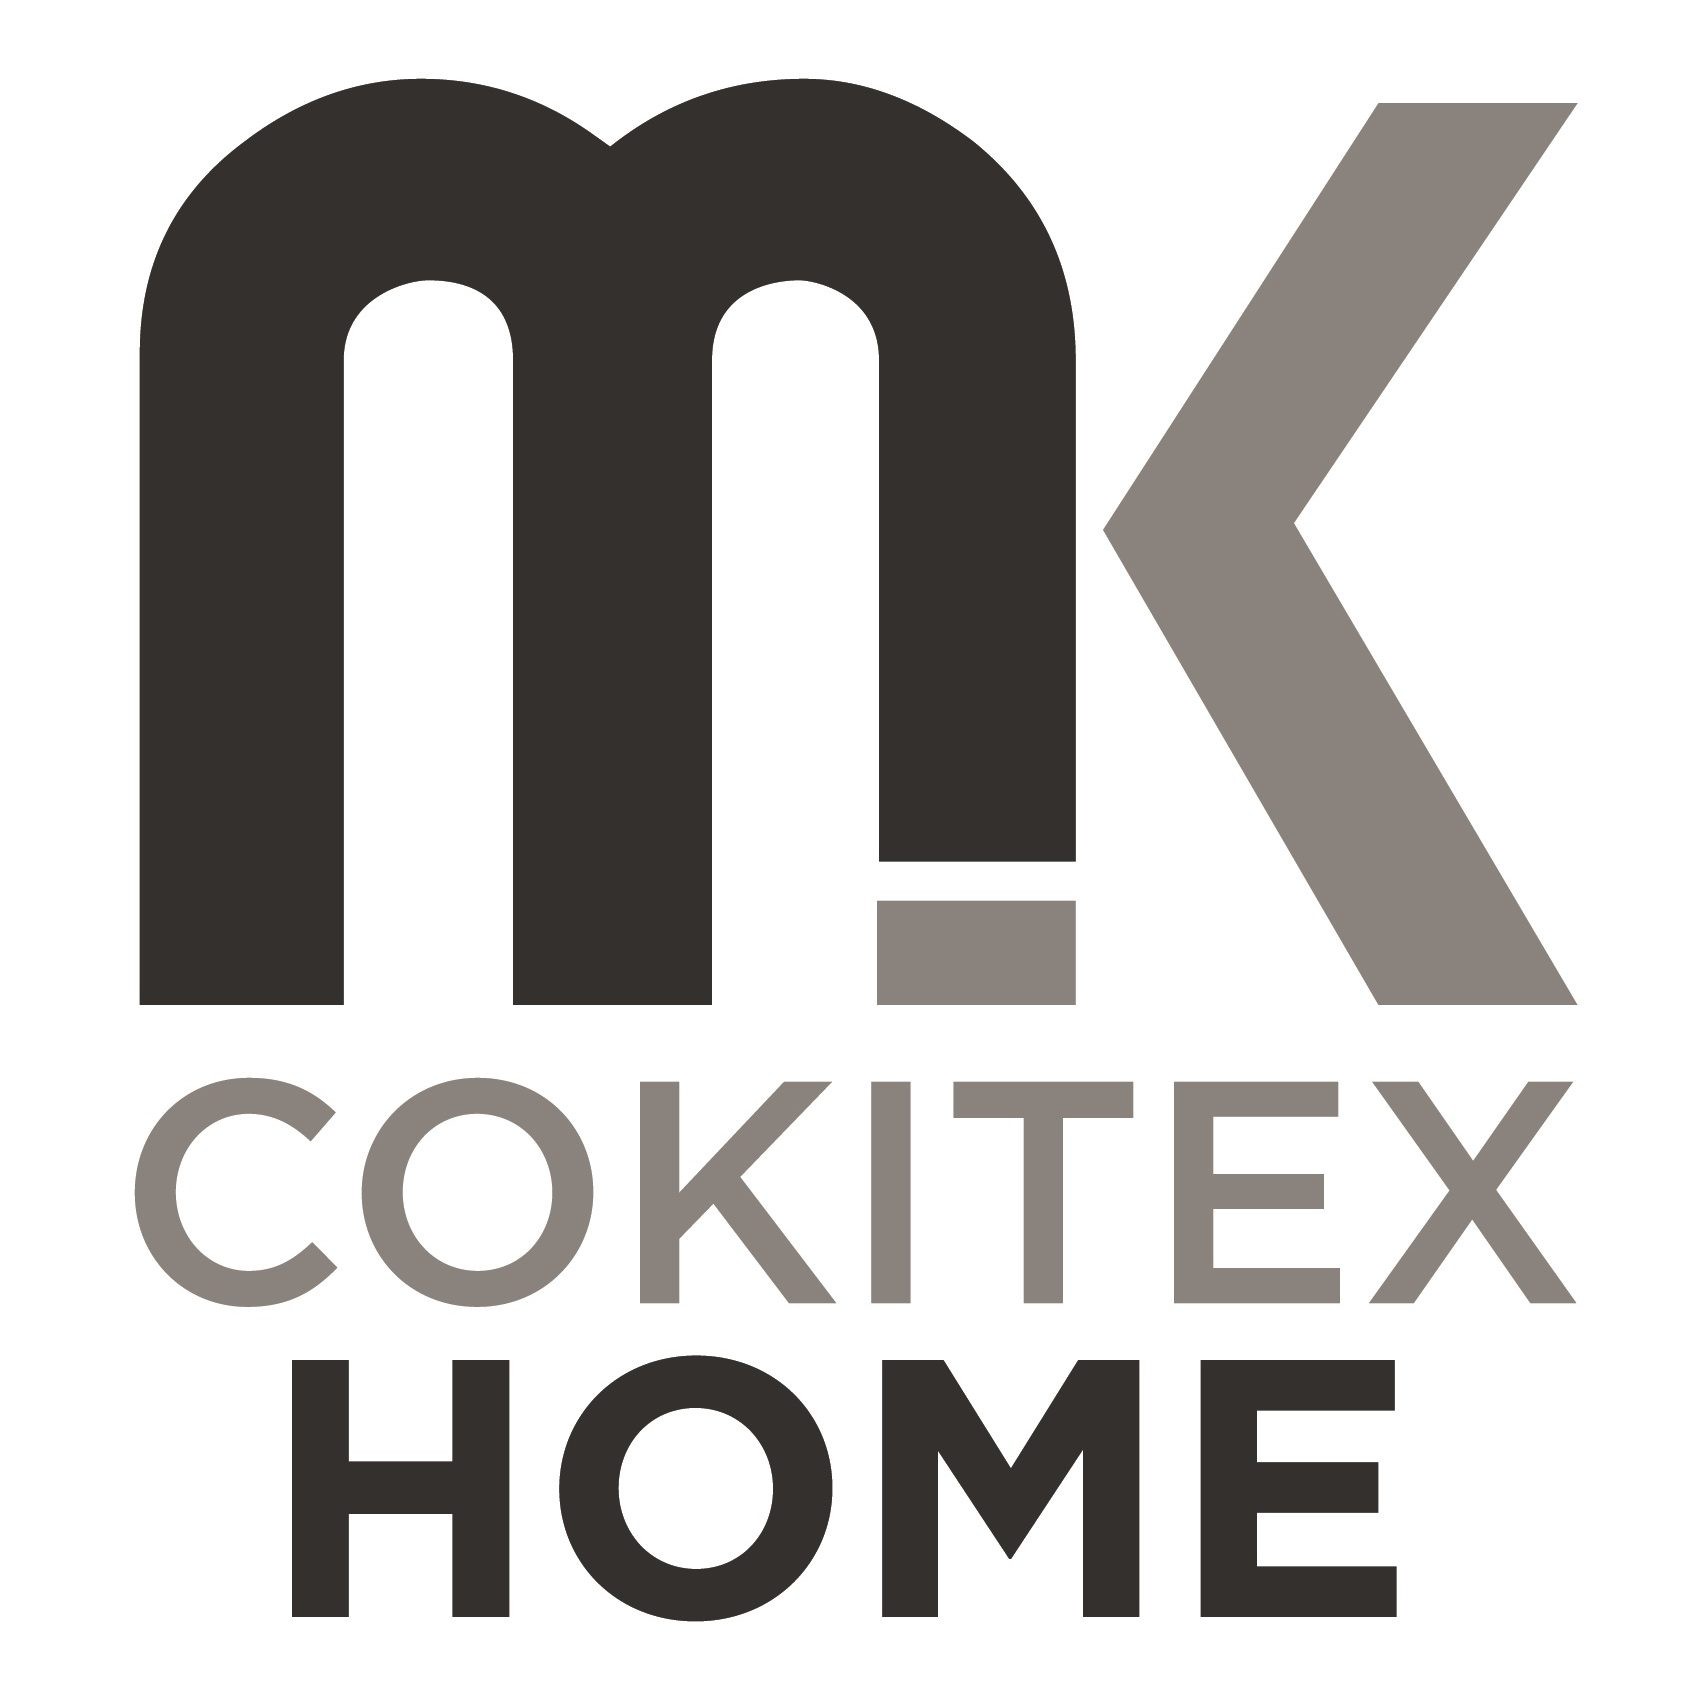 COKITEX HOME